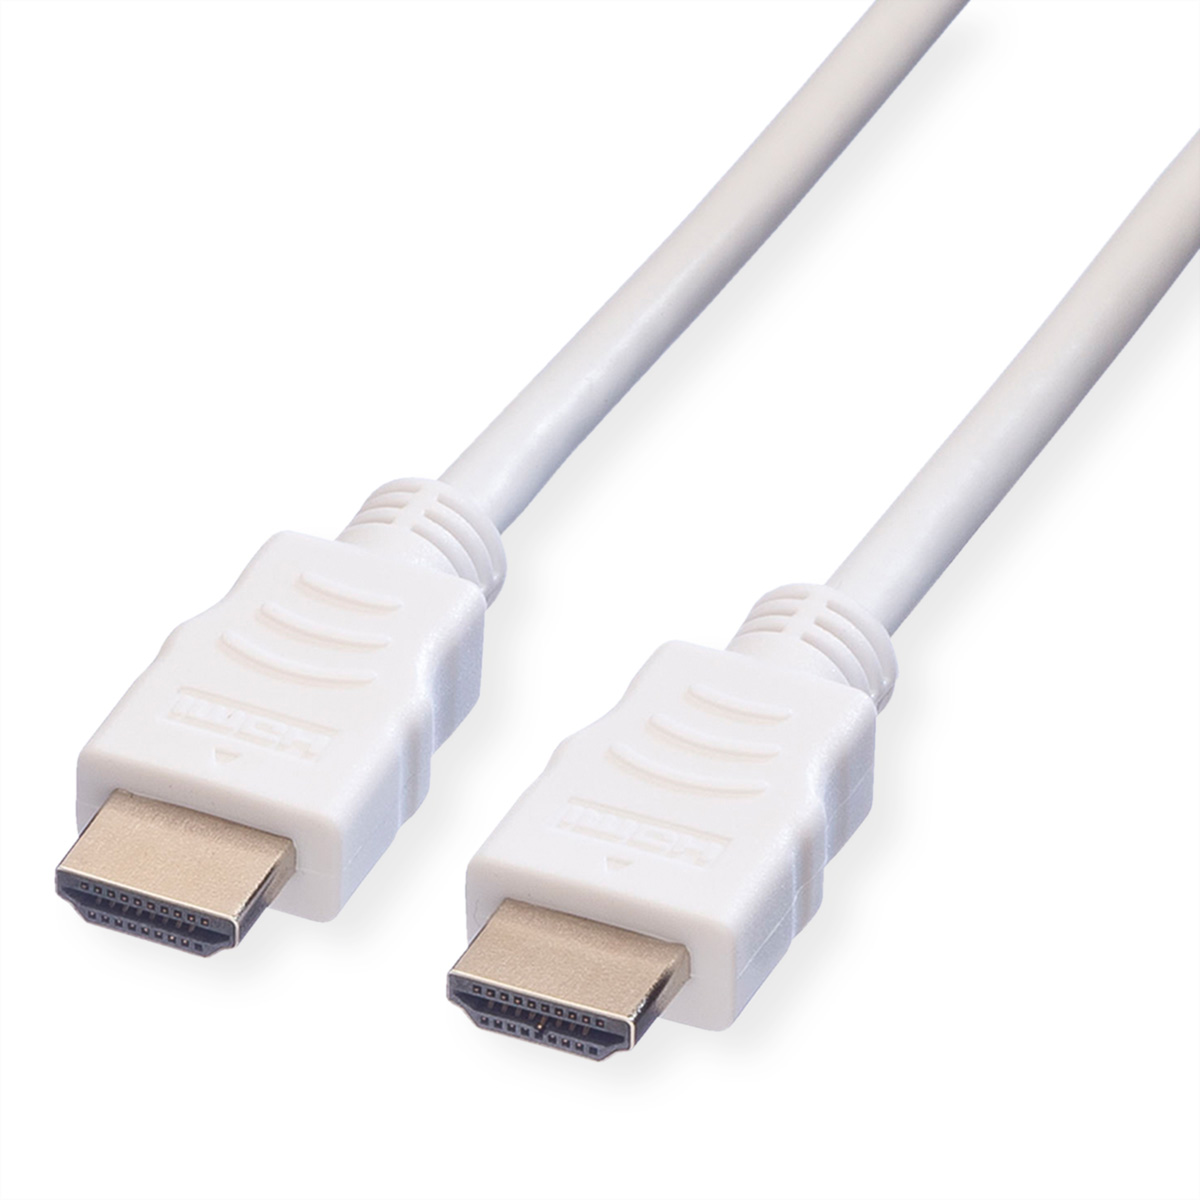 HDMI High Ethernet Kabel mit Speed Speed High Kabel HDMI Ethernet mit VALUE